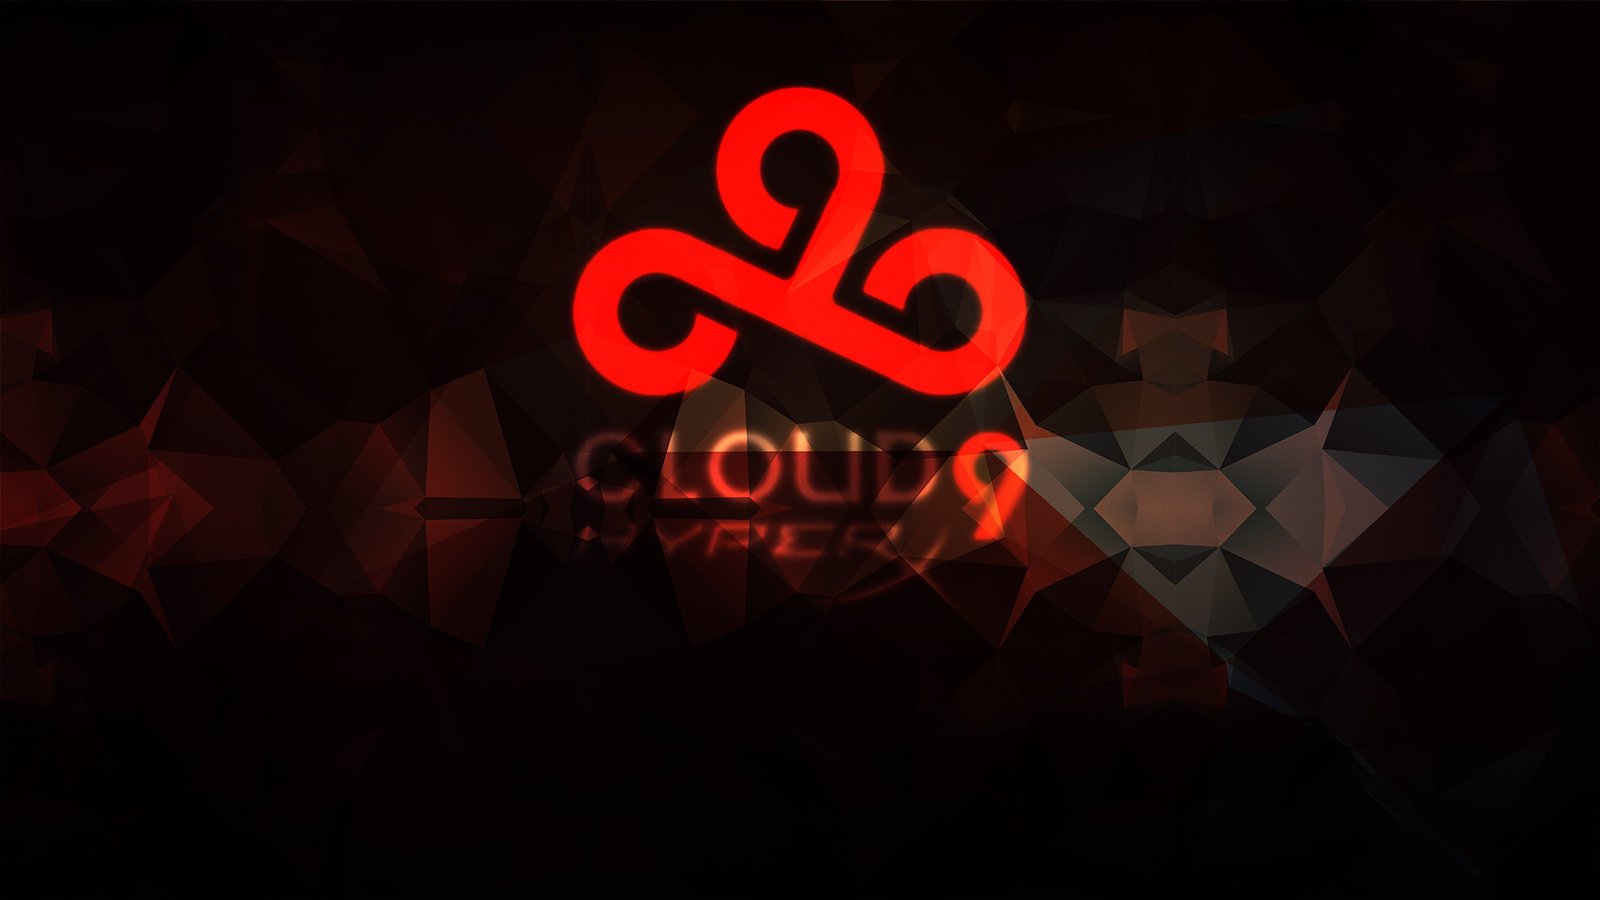 Cloud 9 Desktop Background by King Fadez on